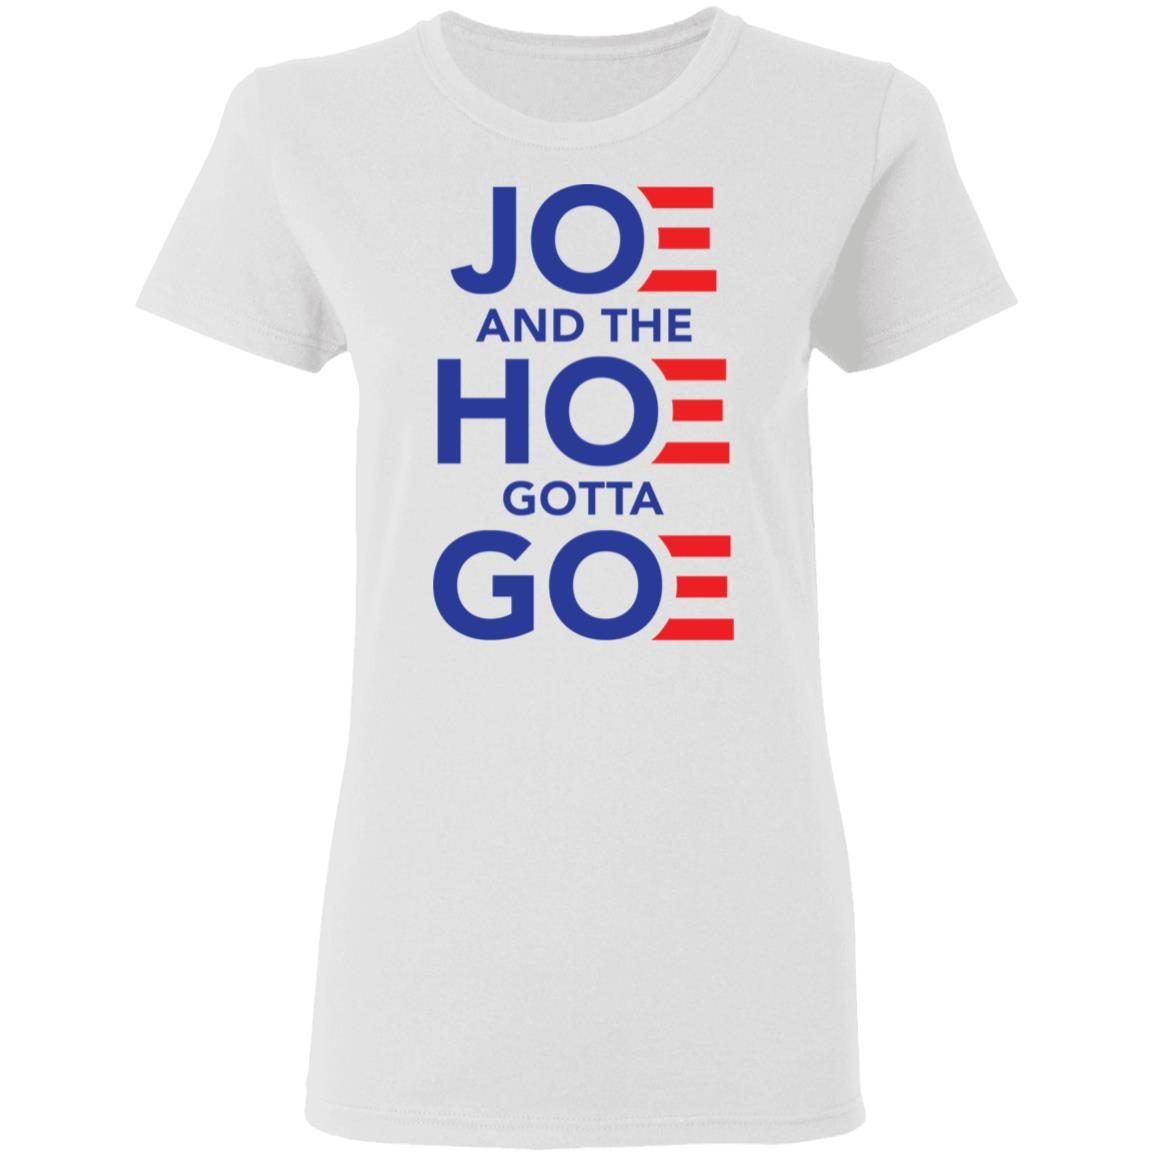 Joe and The Hoe Gotta Go shirt